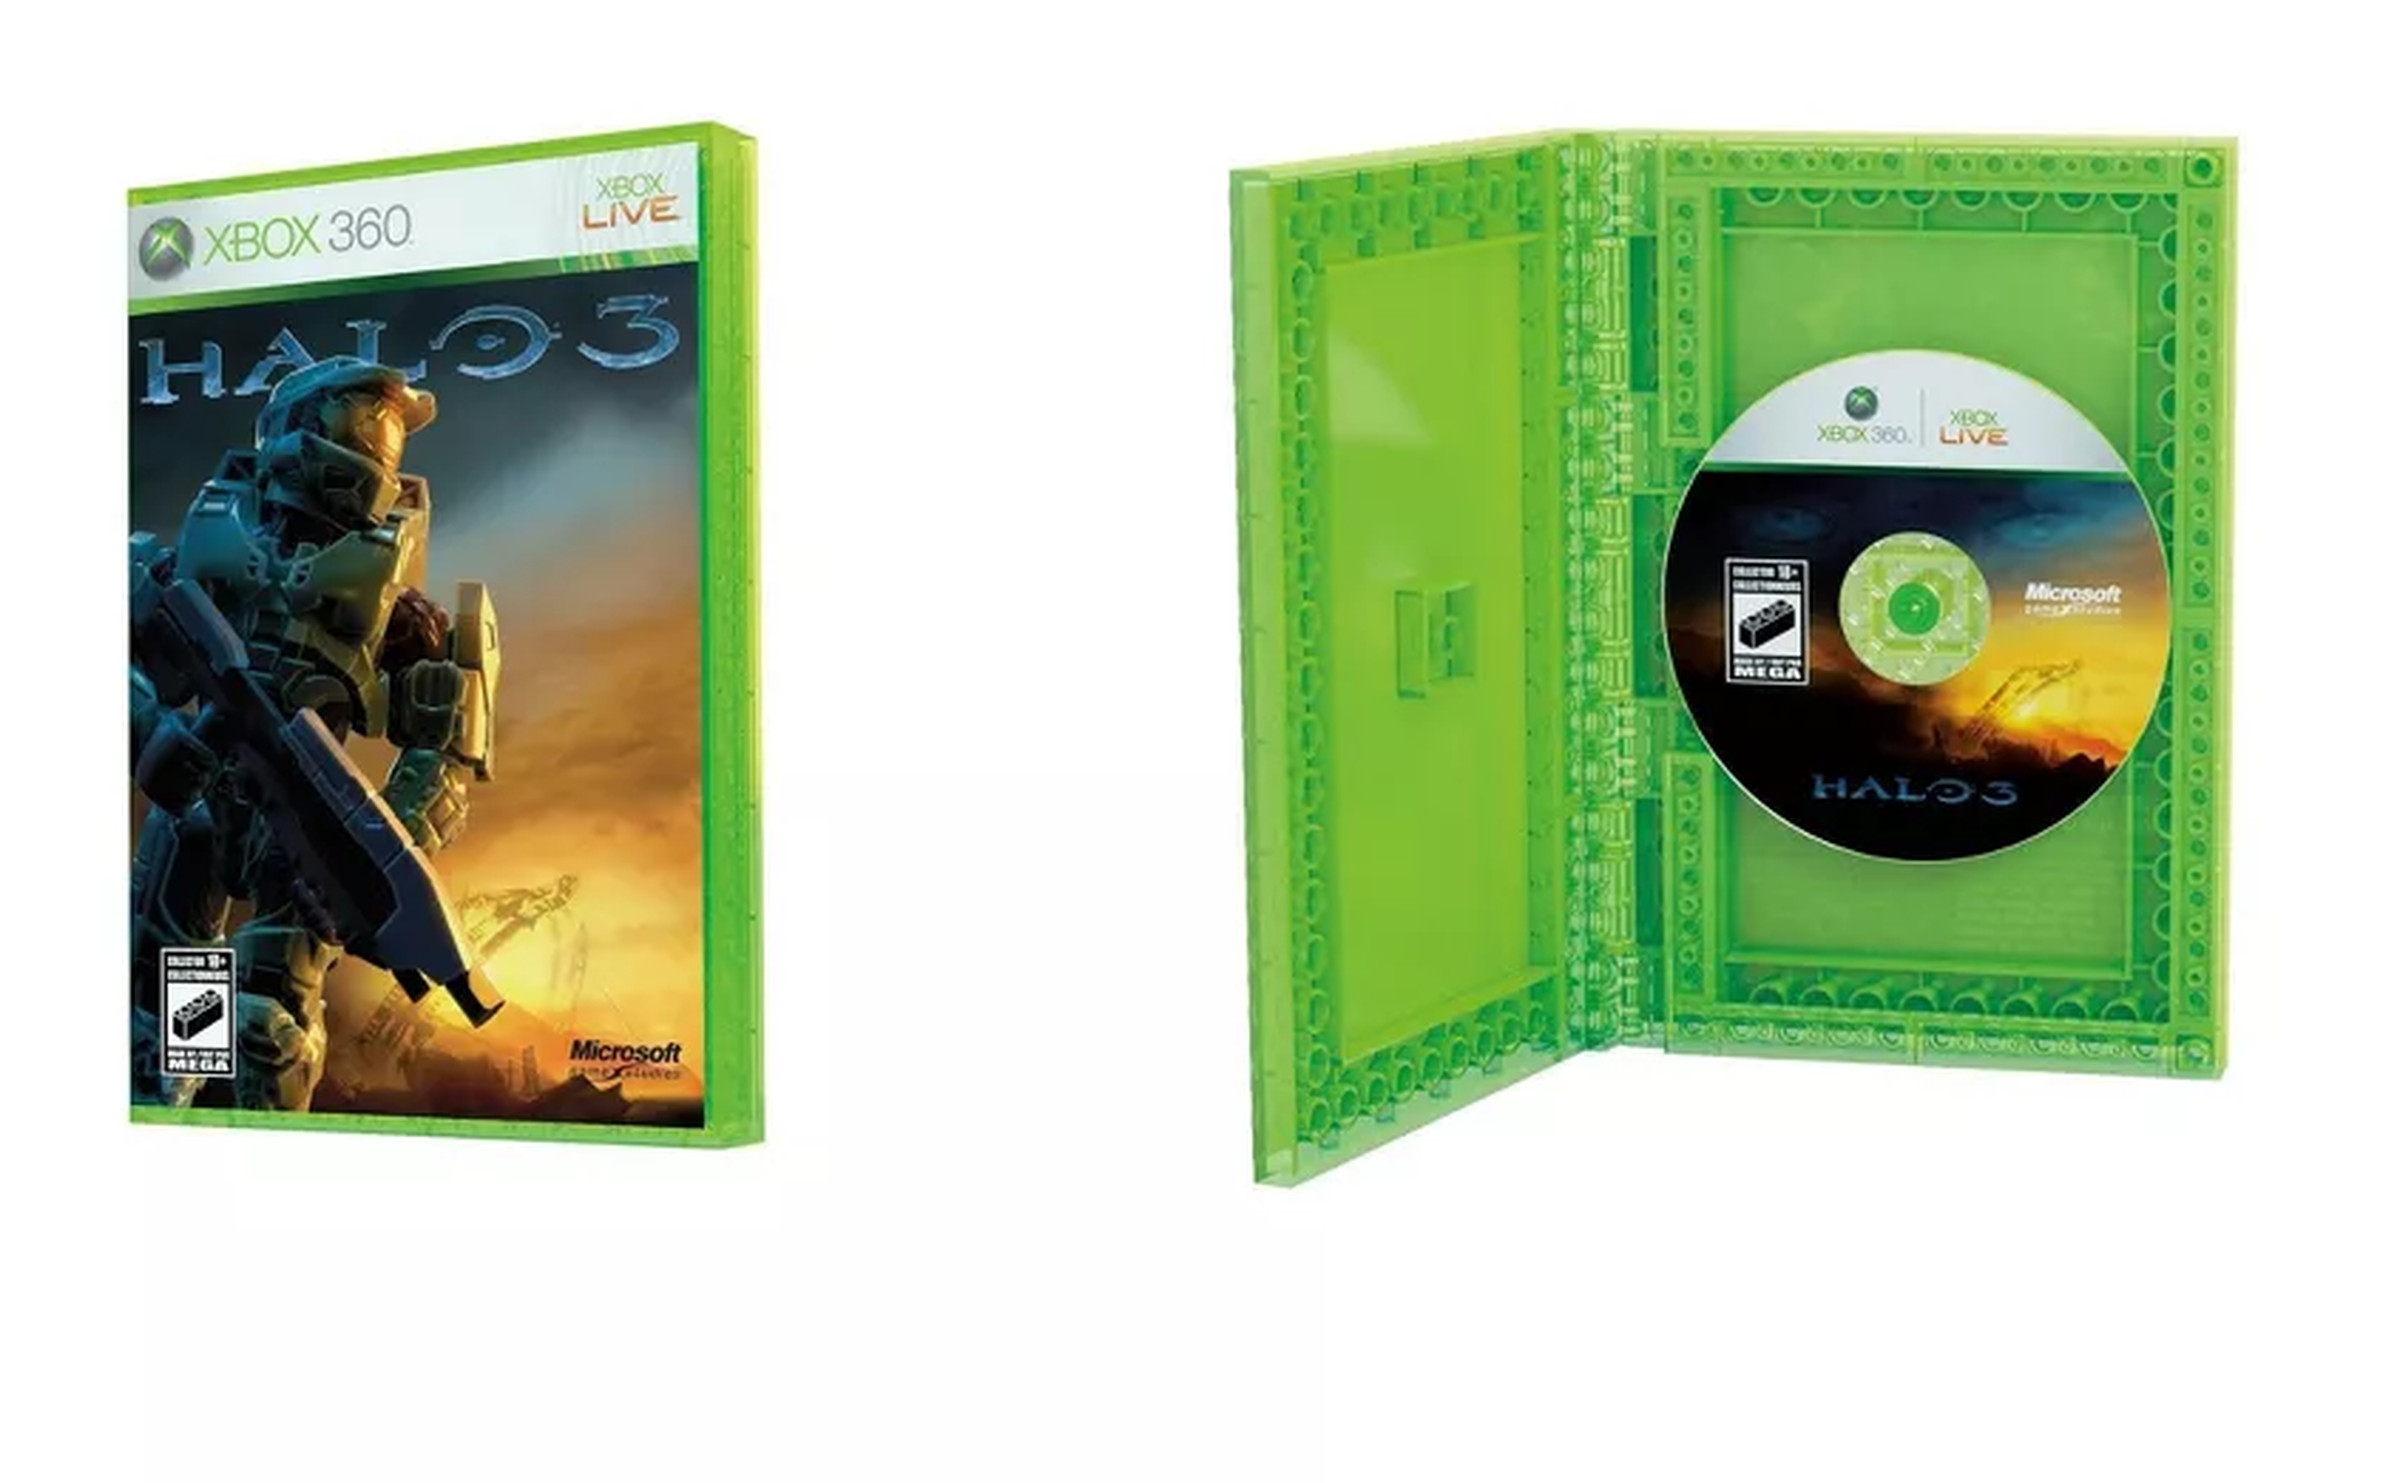 Image from Mega’s Xbox 360 console replica featuring a replica of the Xbox game Halo 3.